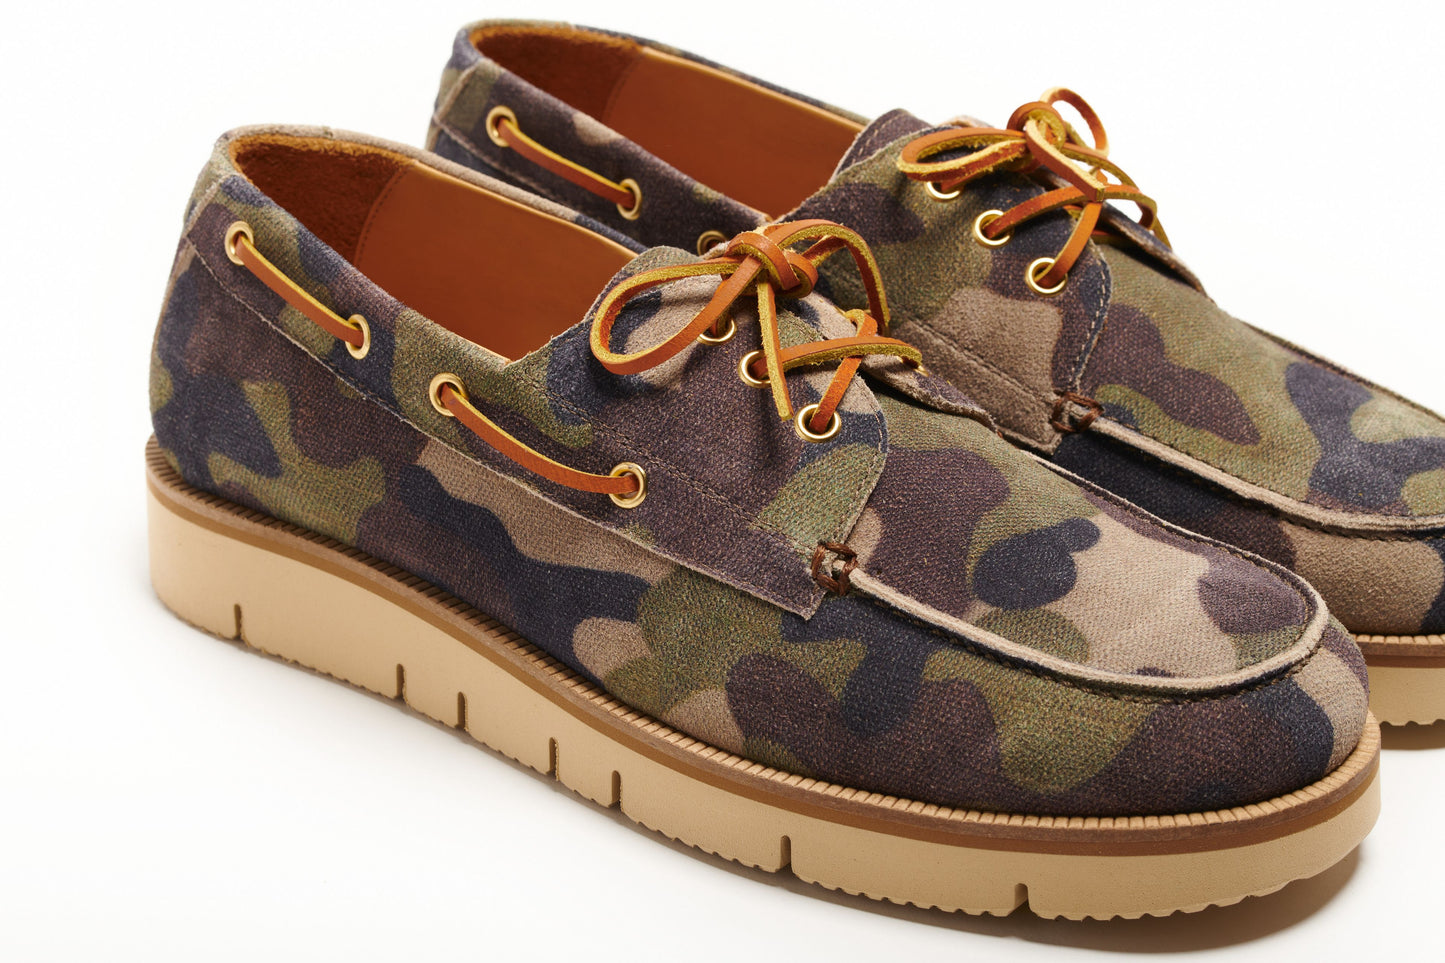 Hopkins Men's Boat Shoes - Camouflage